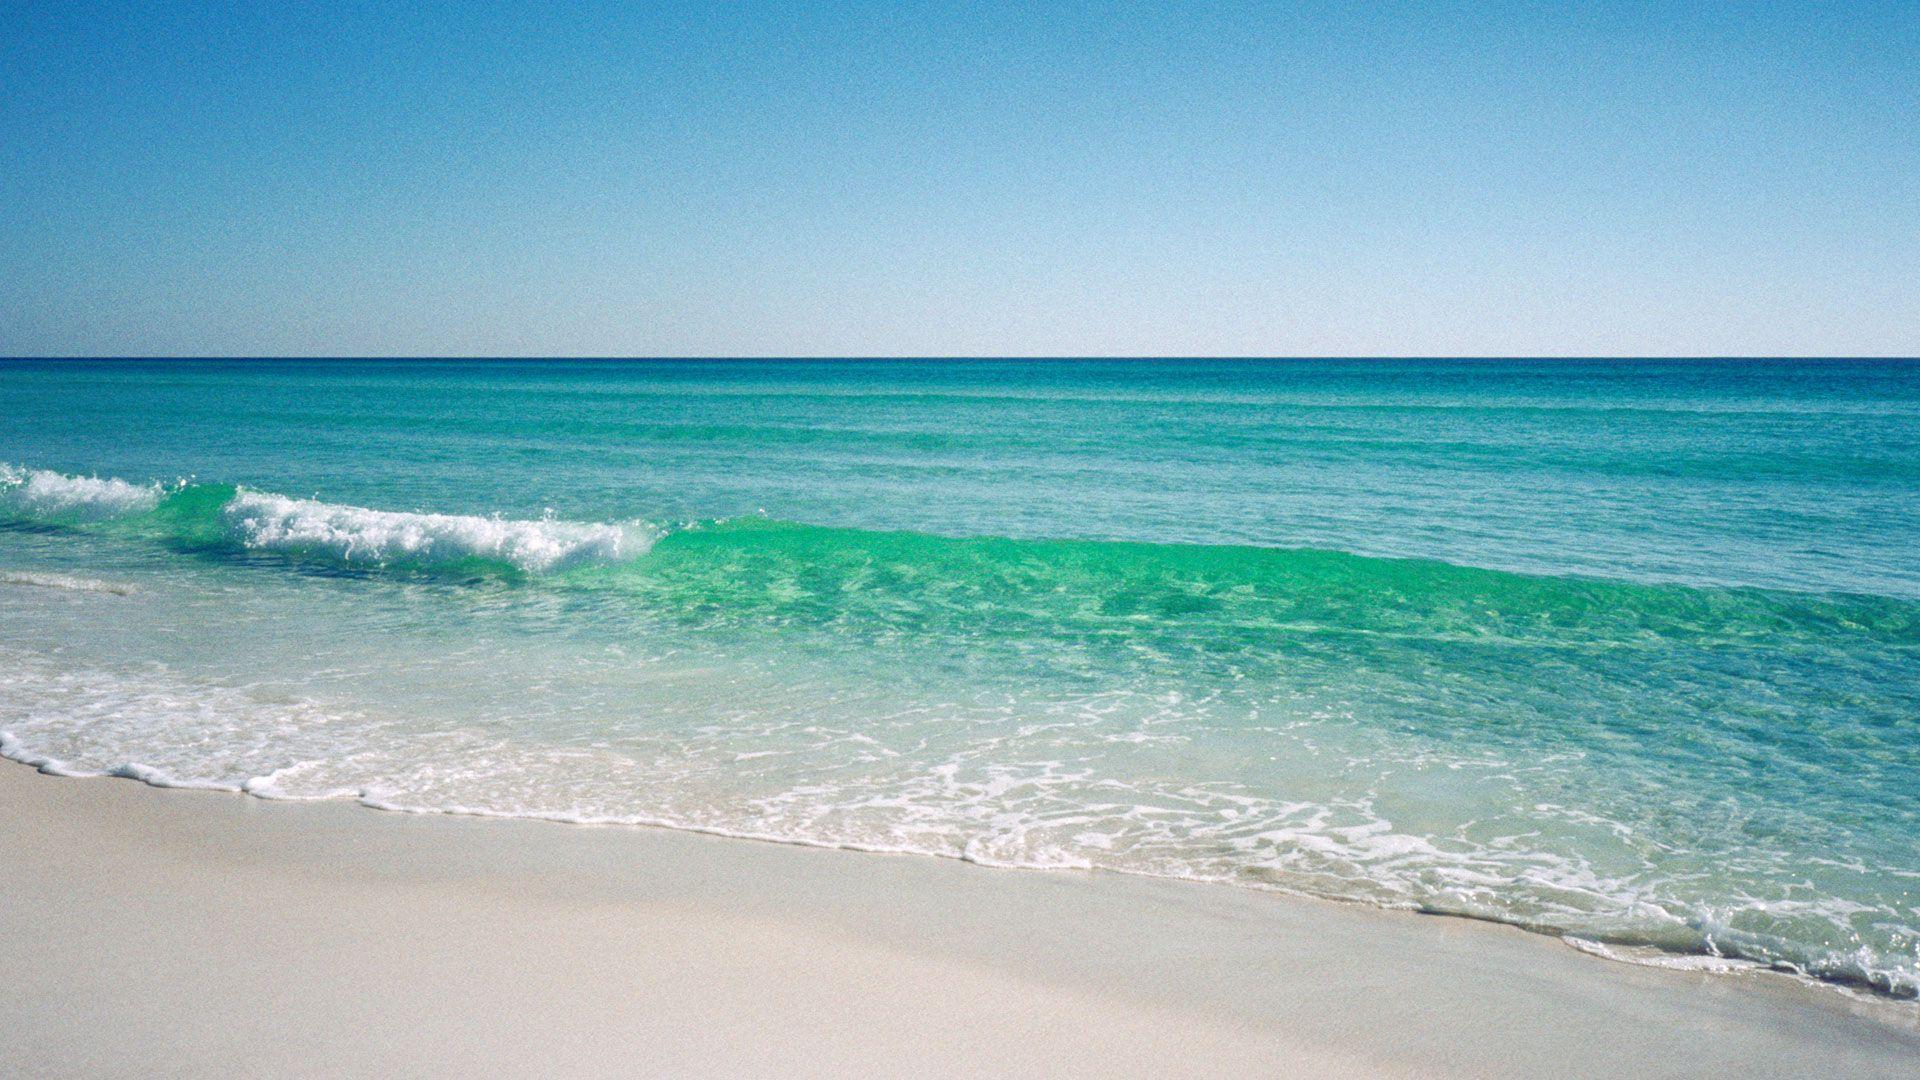 The Emerald Coast. #Destin #Florida #beach #honeymoon #anniversary